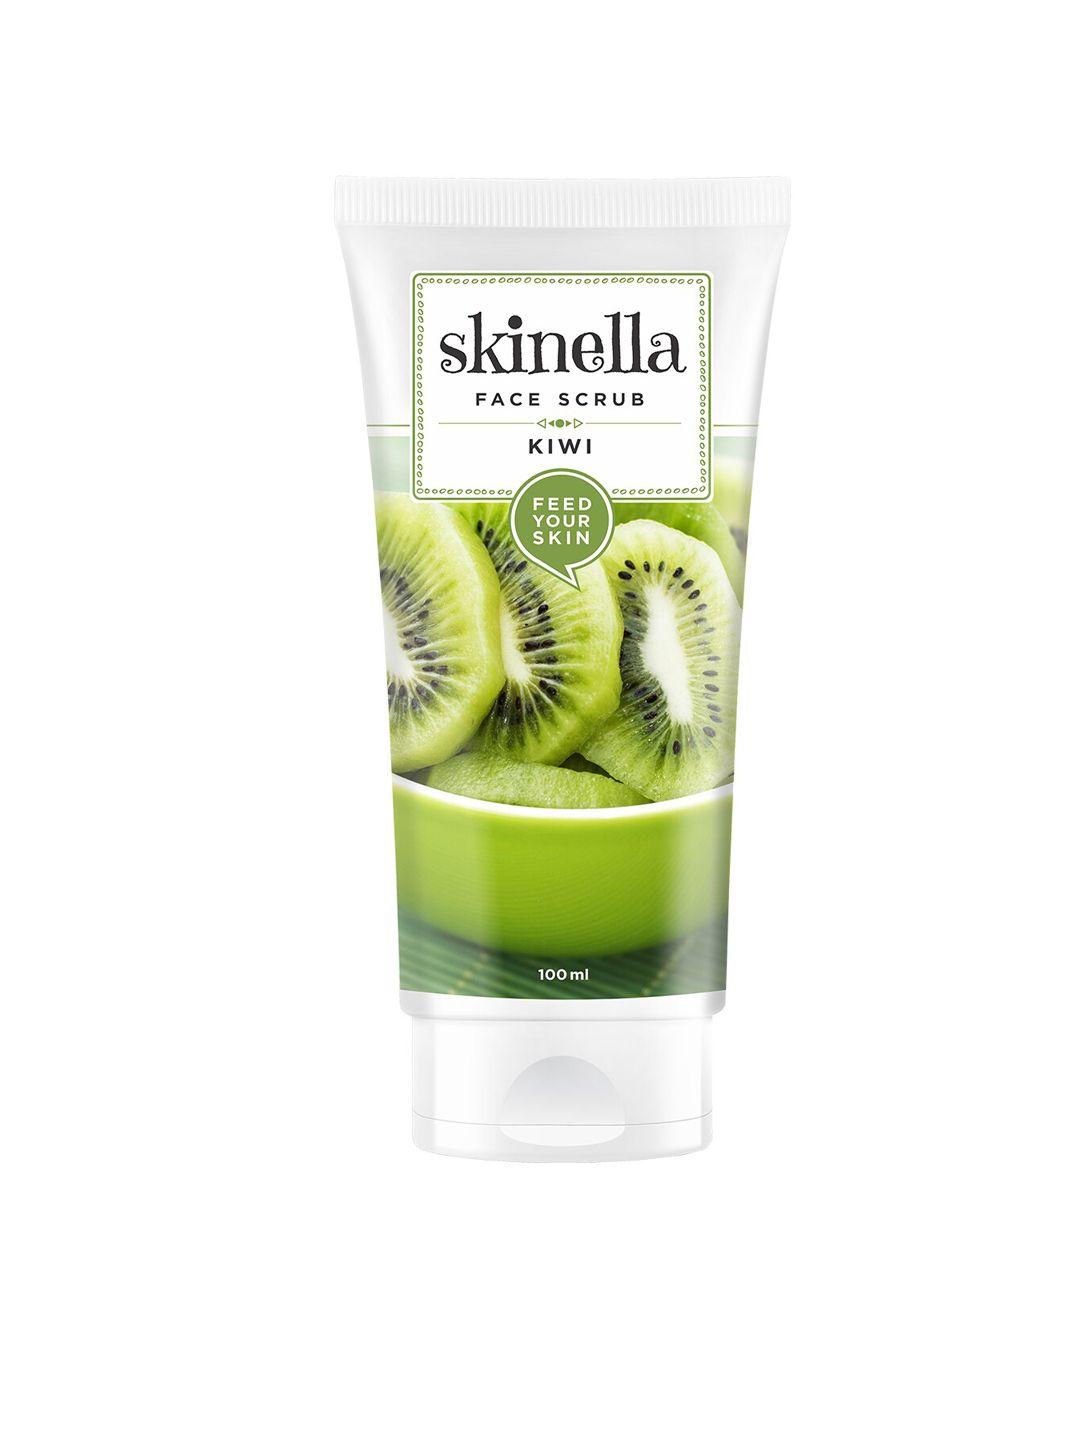 skinella feed your skin kiwi face scrub 100 gm